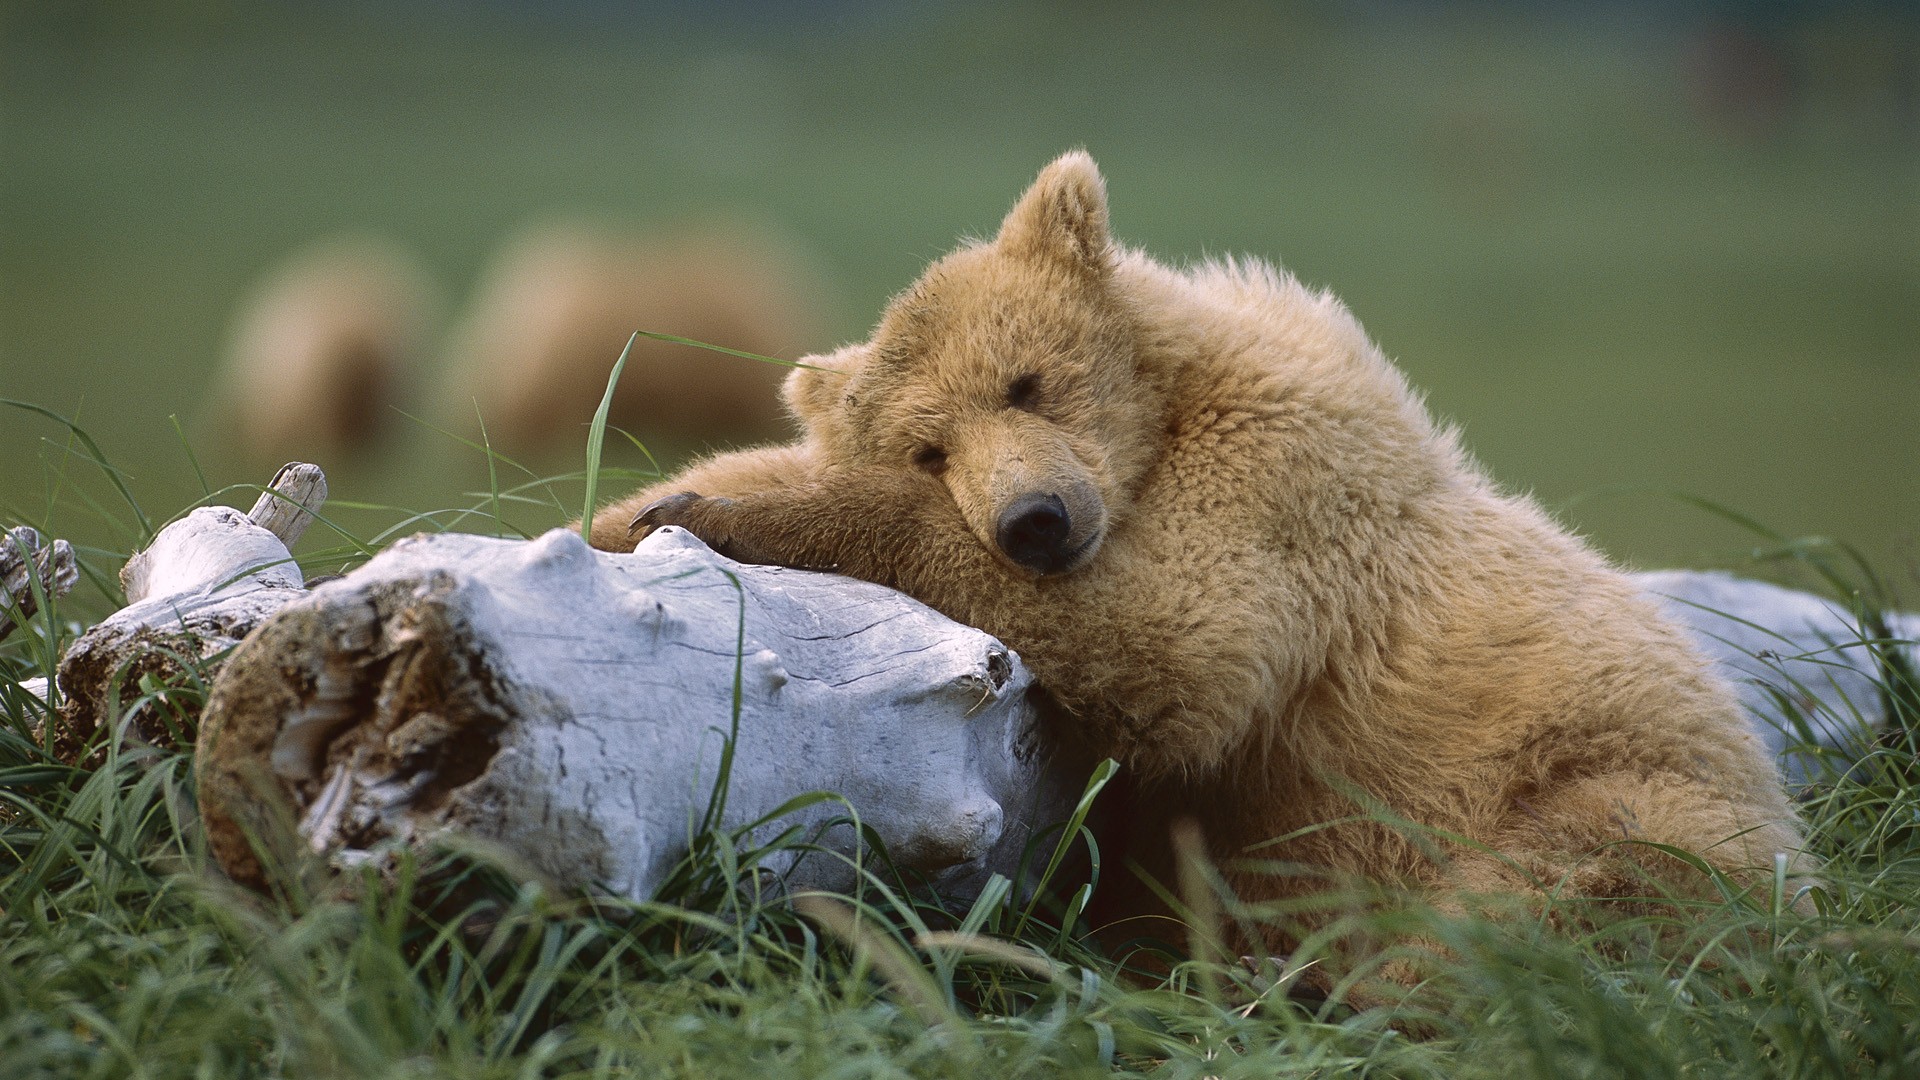 206628 Bild herunterladen tiere, grizzlybär, alaska, braunbär, süß, katmai nationalpark, protokoll, ausruhen, bären - Hintergrundbilder und Bildschirmschoner kostenlos